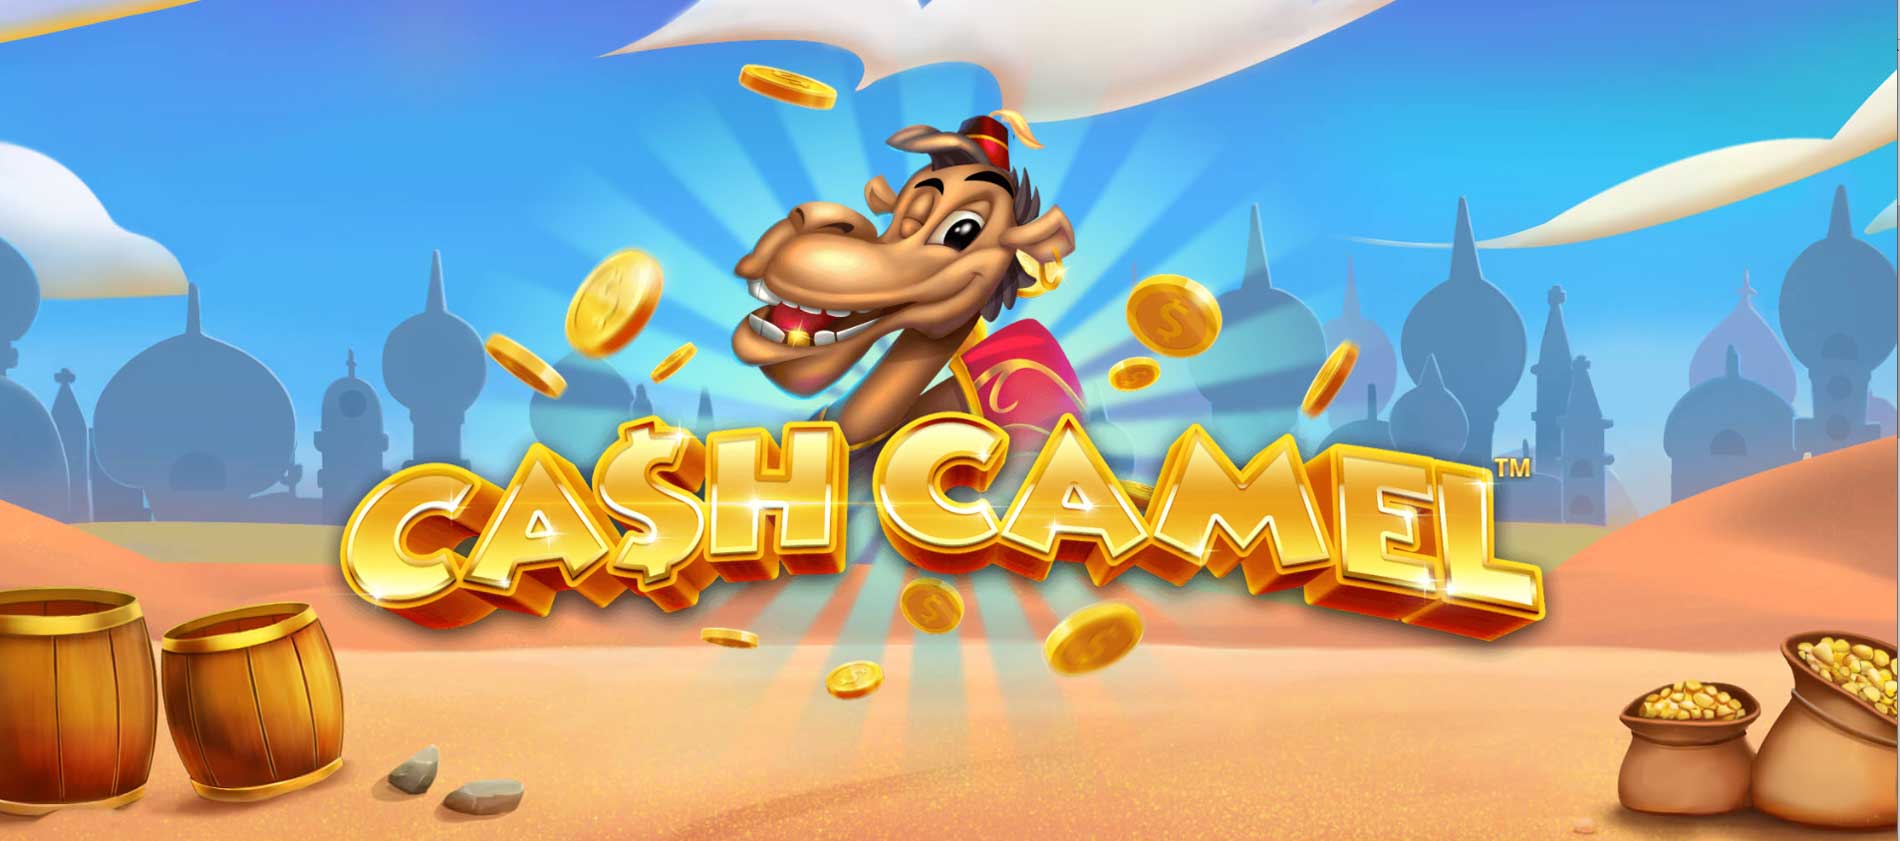 Cash Camel slot cover image